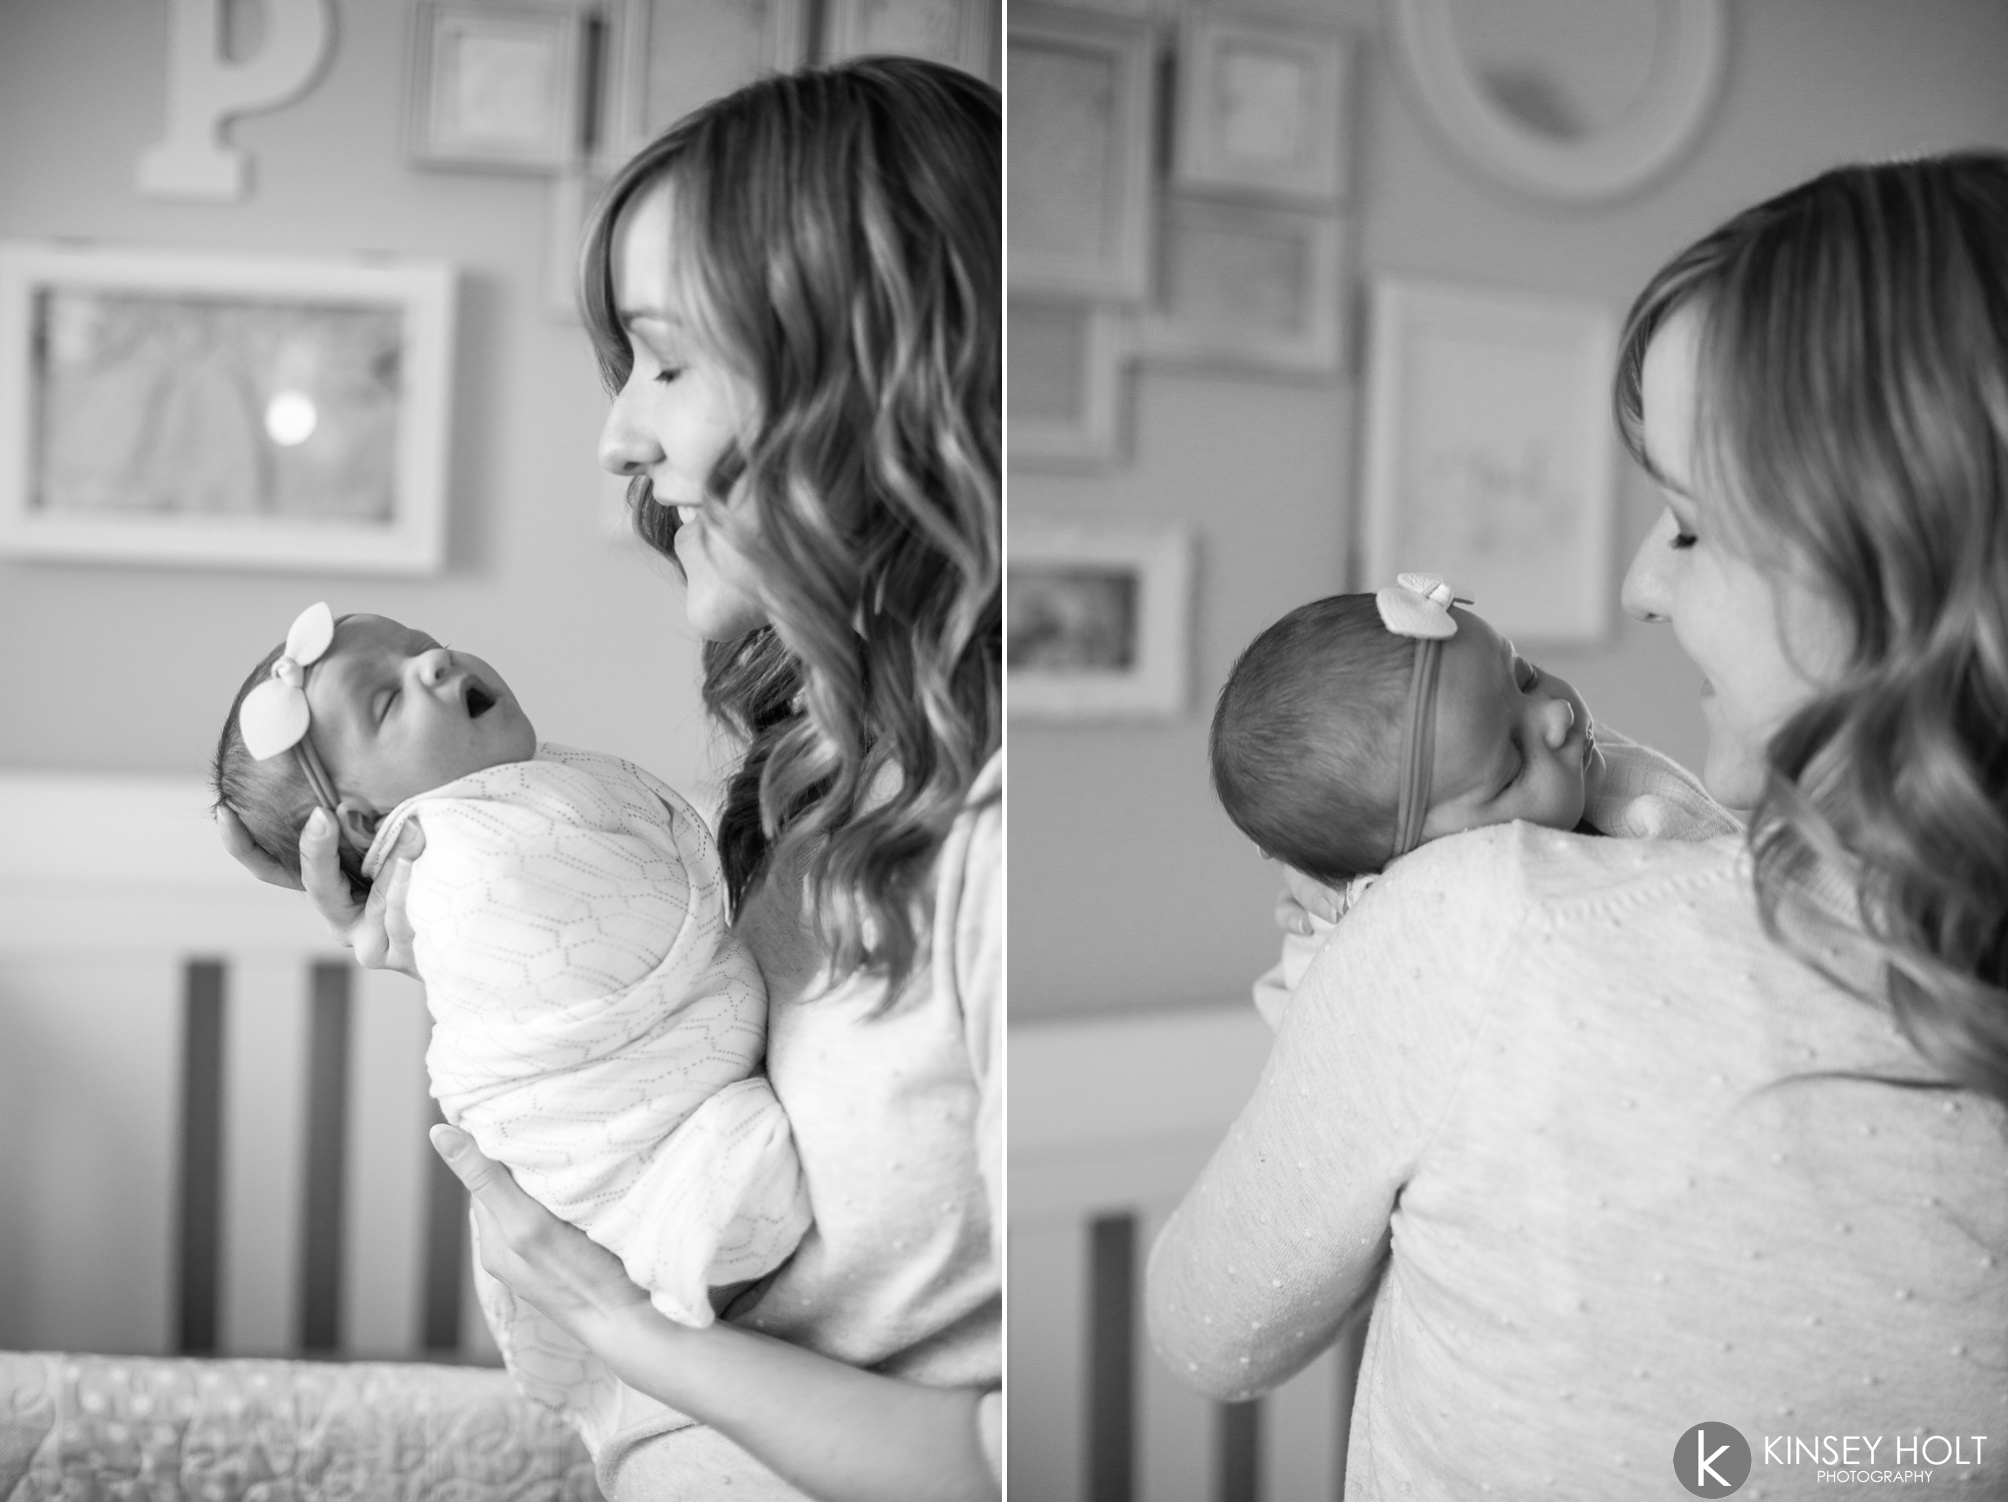 Kinsey Holt Photography Lifestyle newborn session